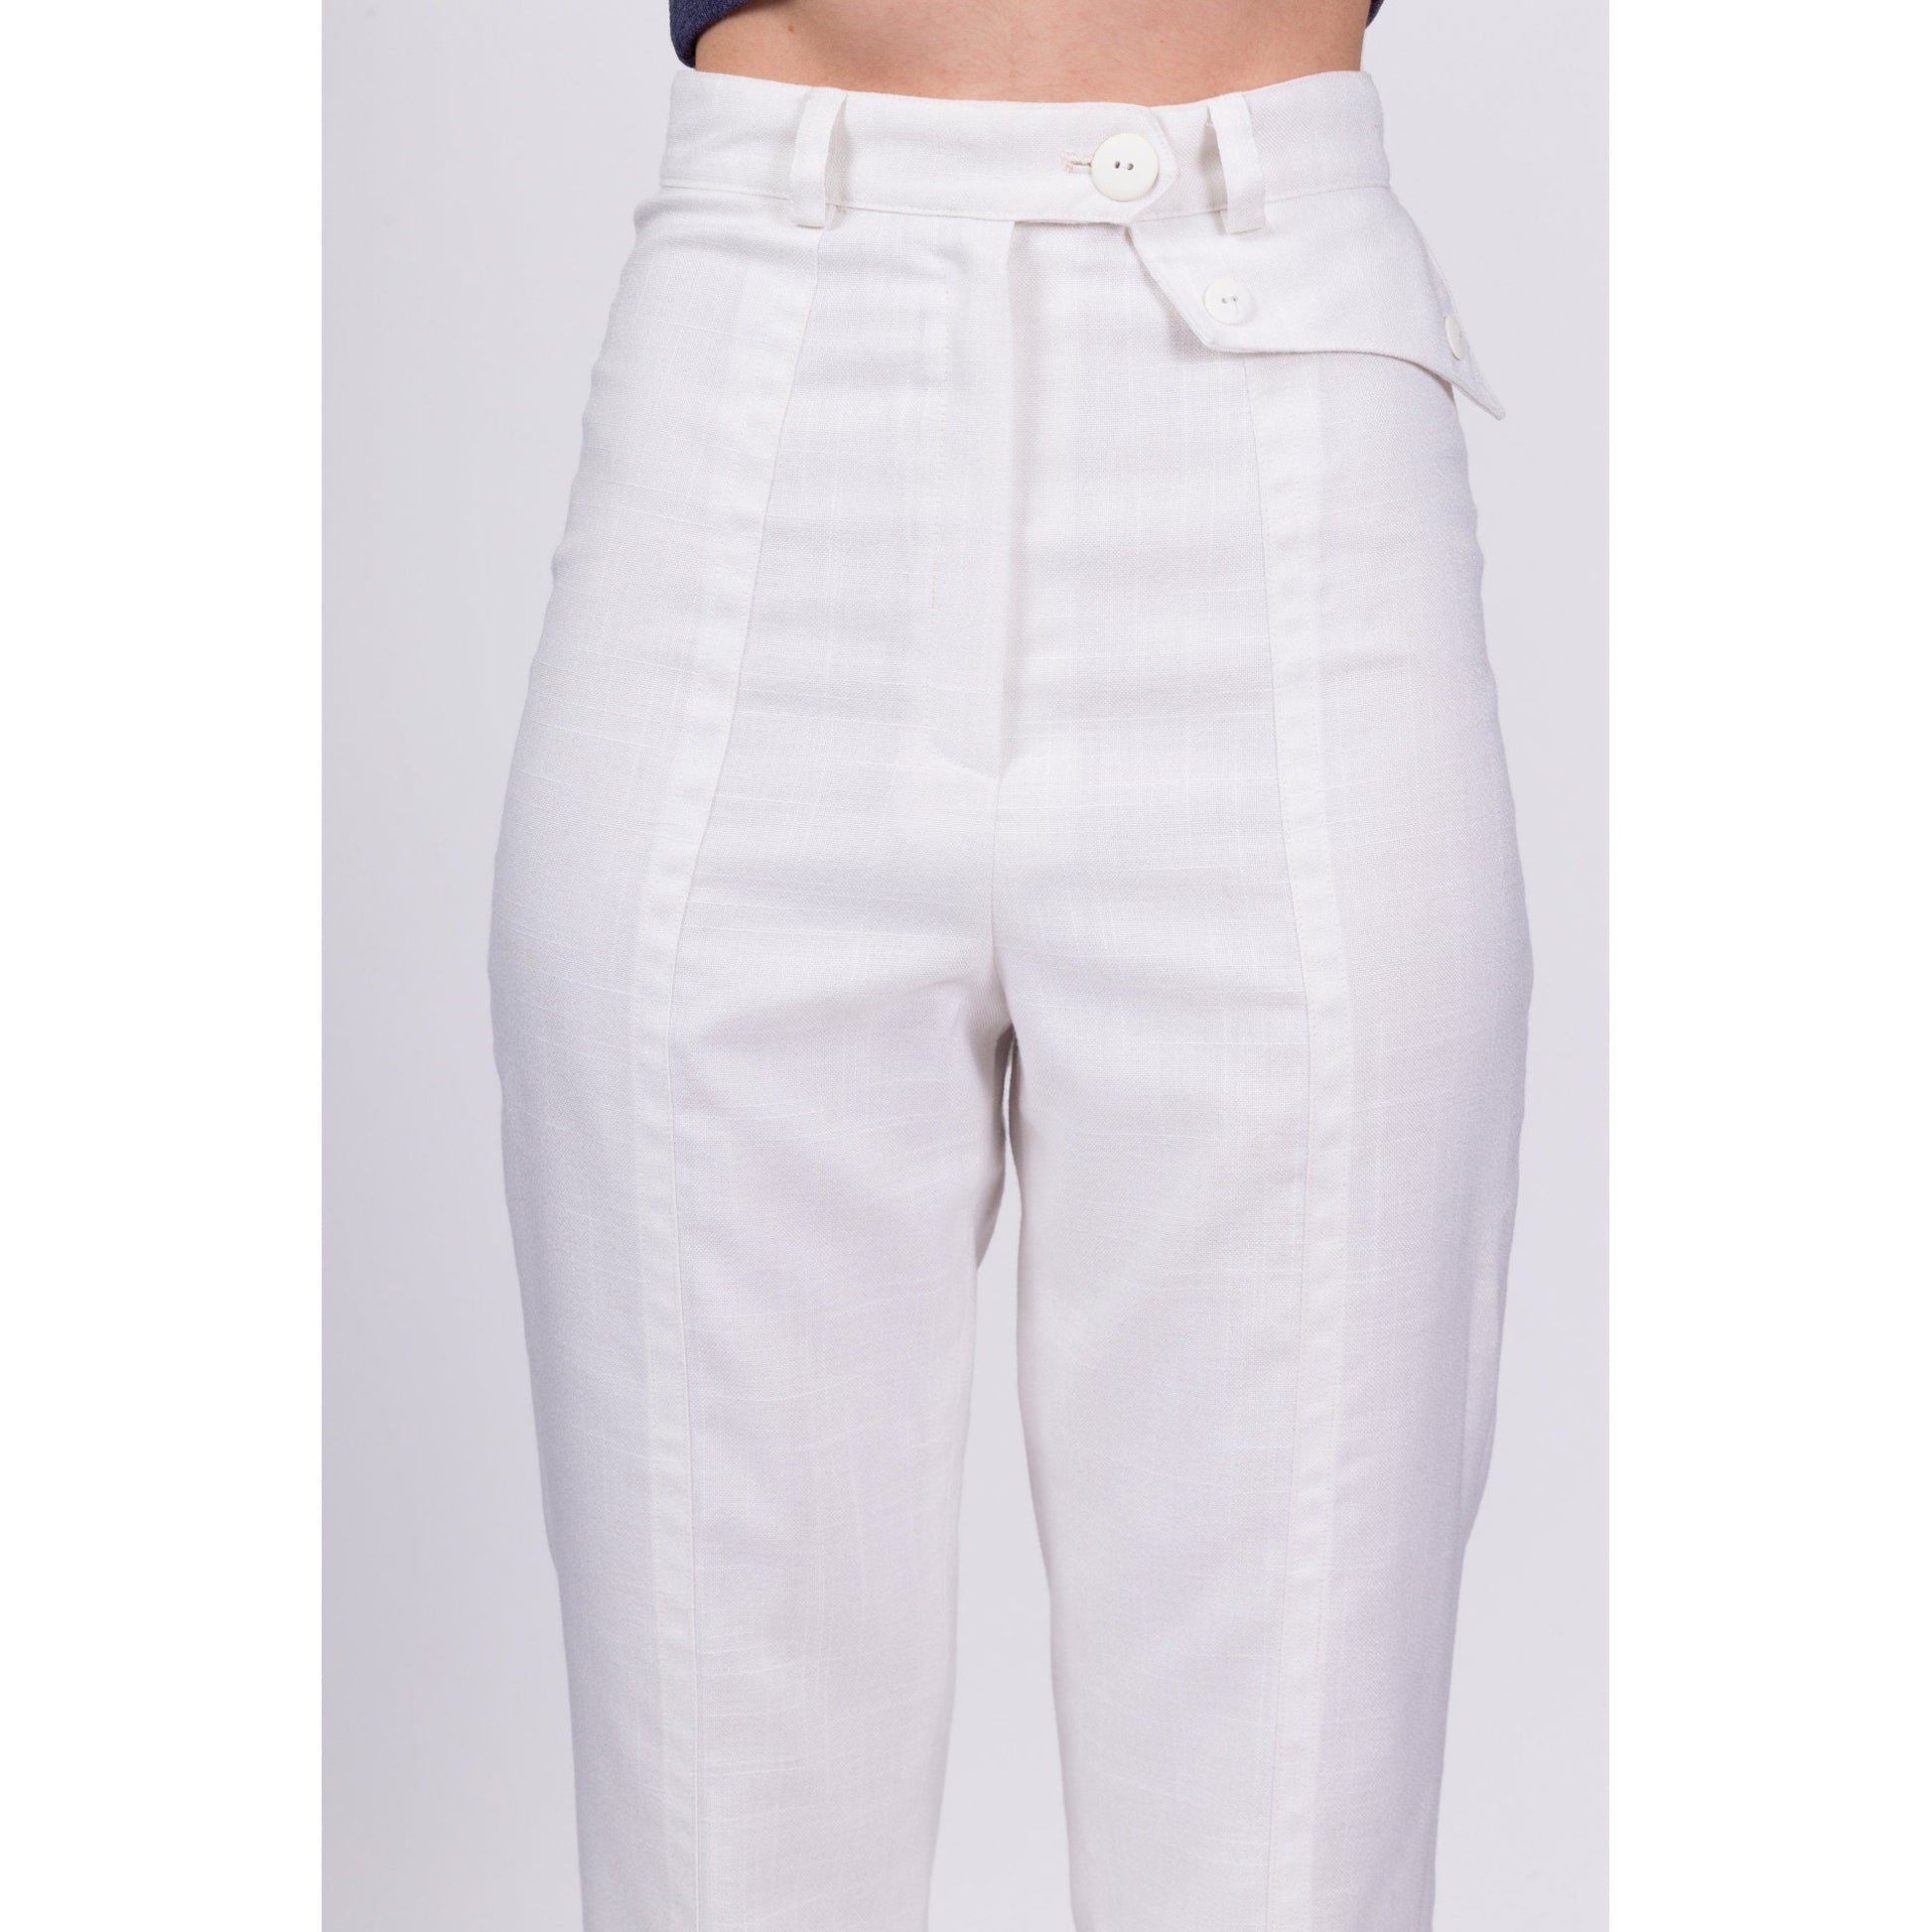 White Capri Pants